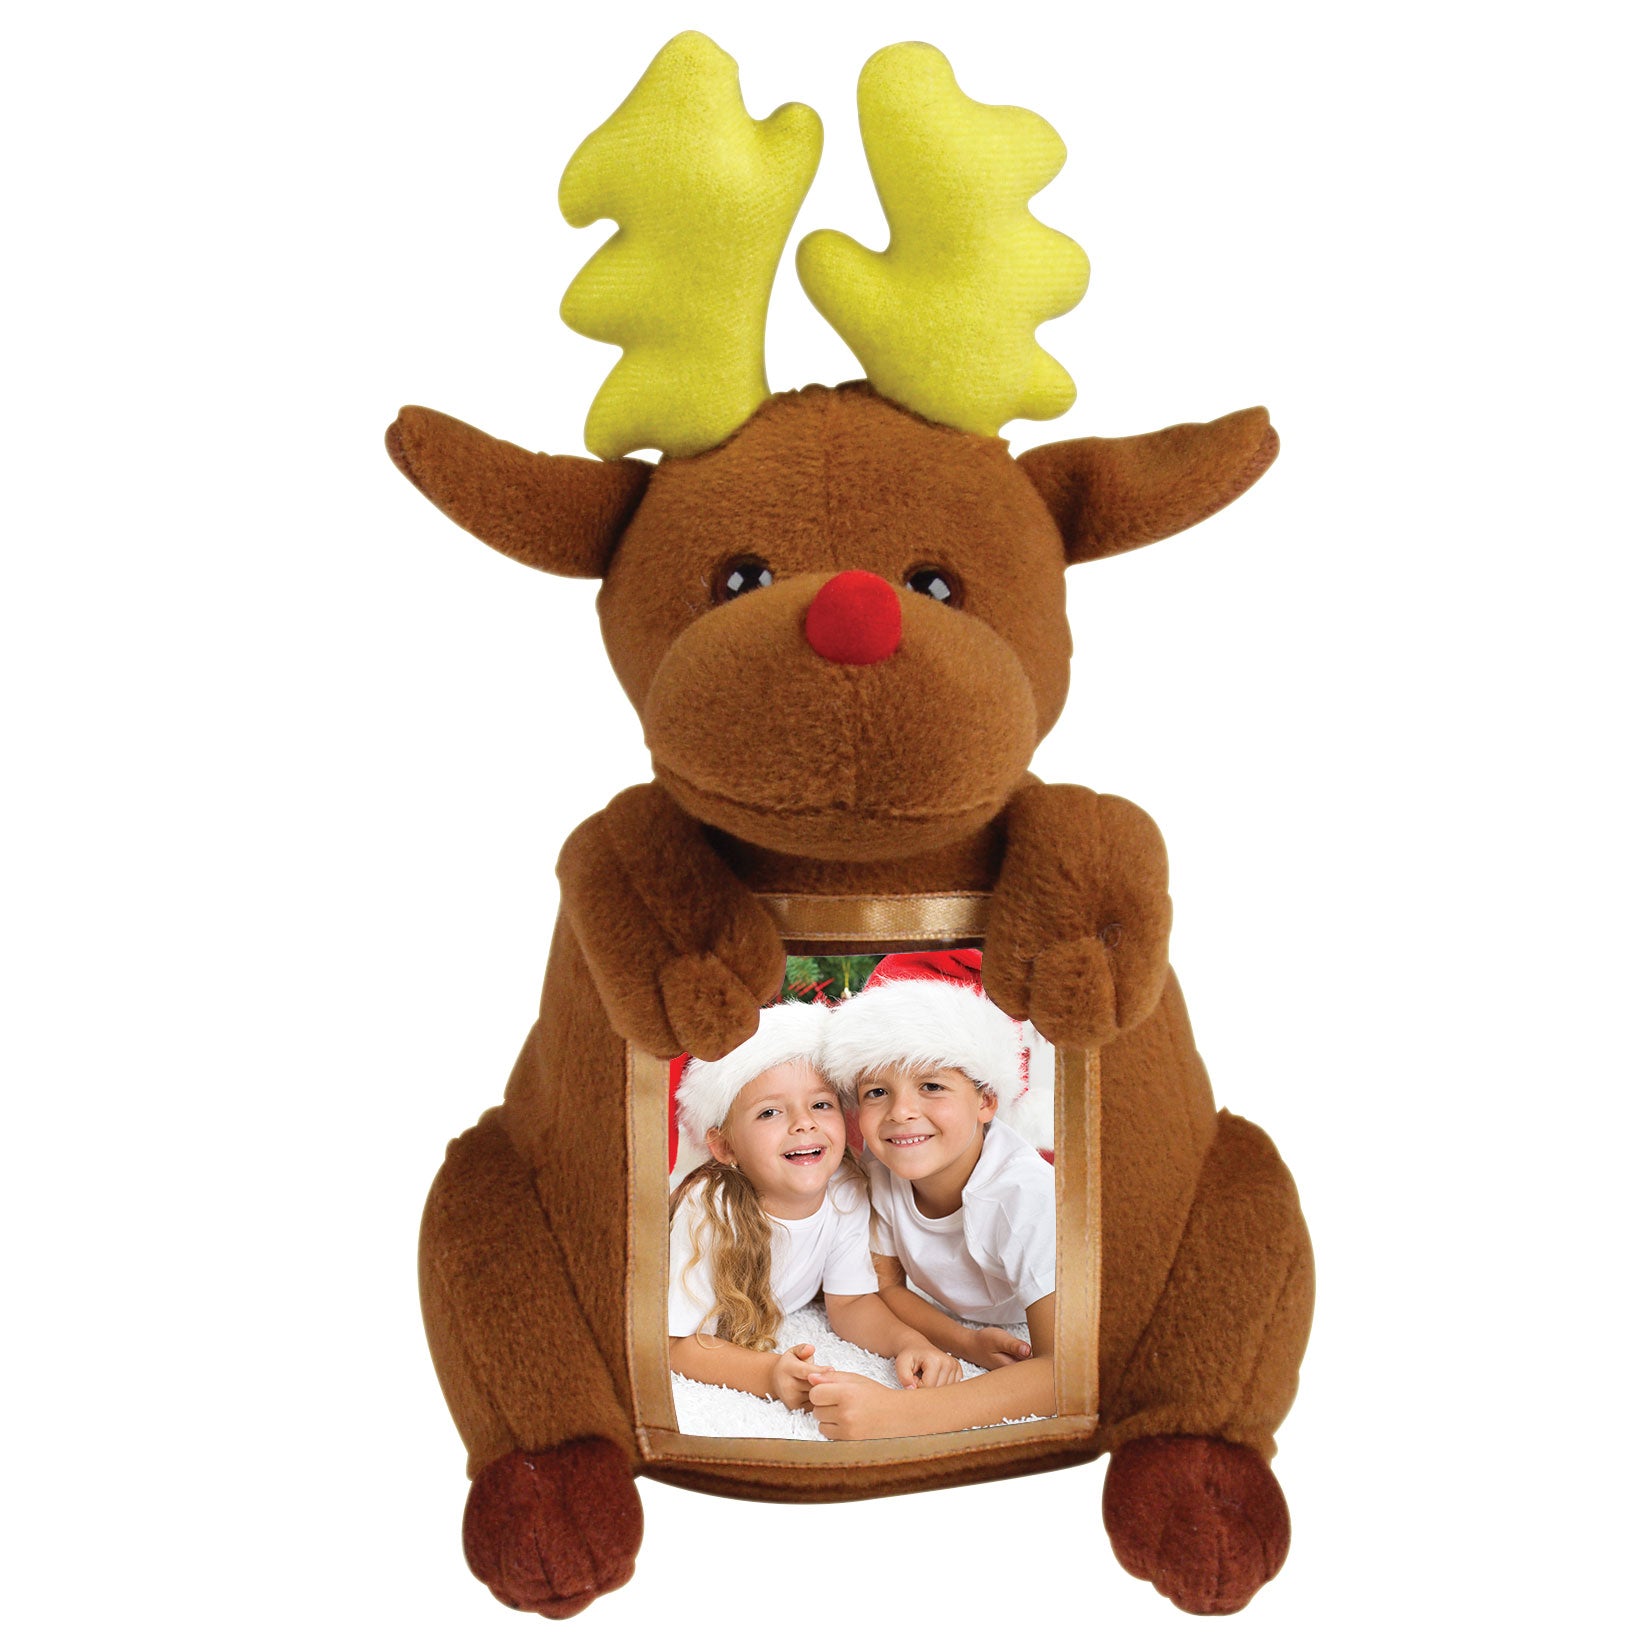 Reindeer Plush Stuffed Animal Photo Frame